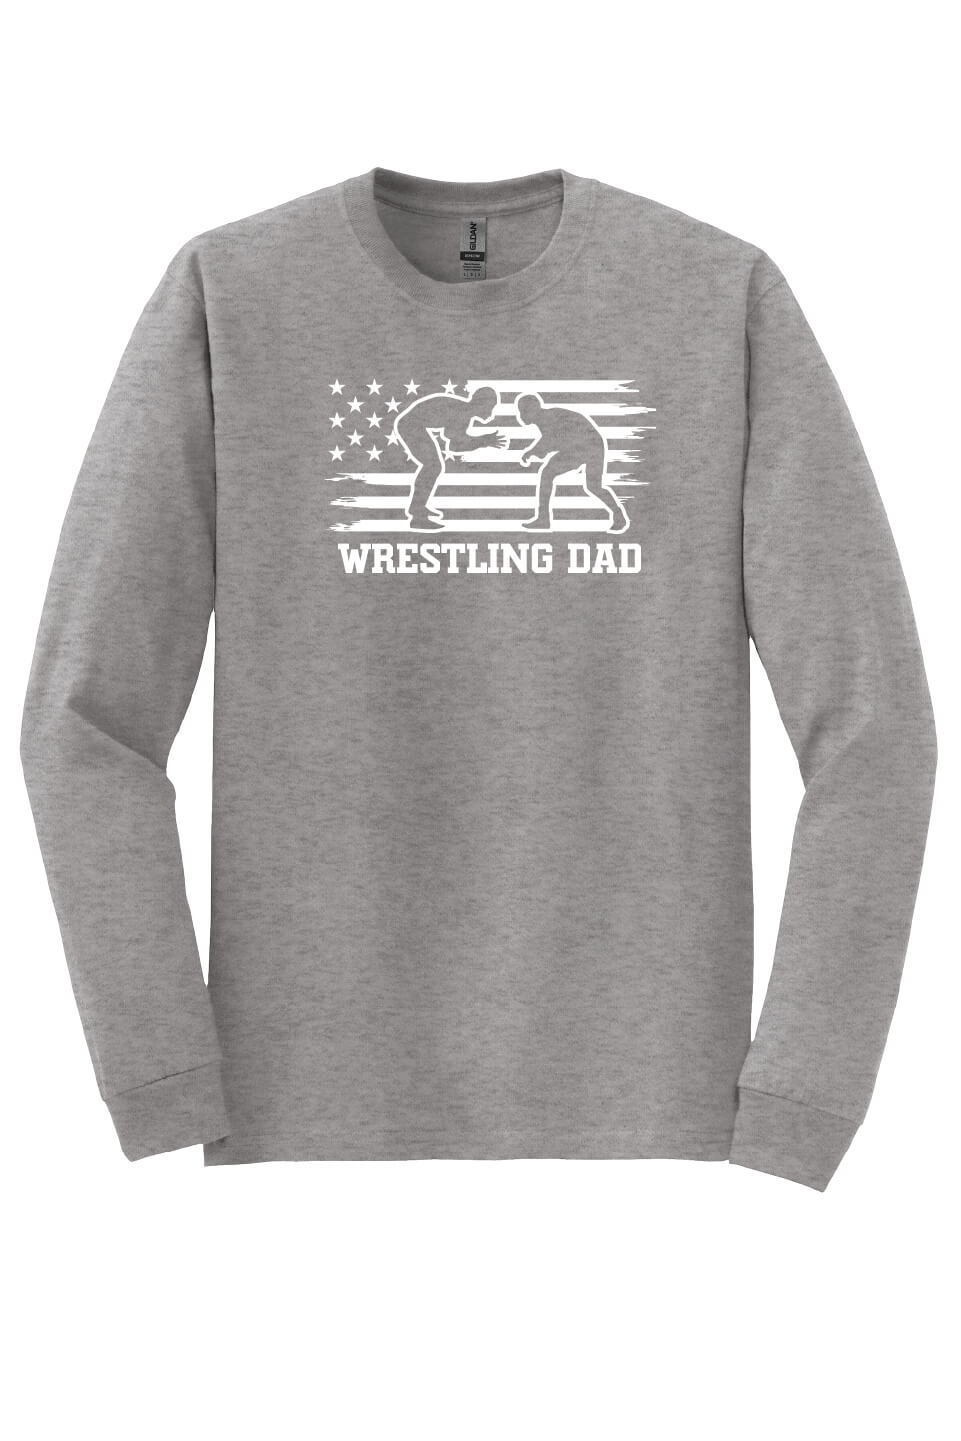 Wrestling Dad Long Sleeve T-Shirt gray